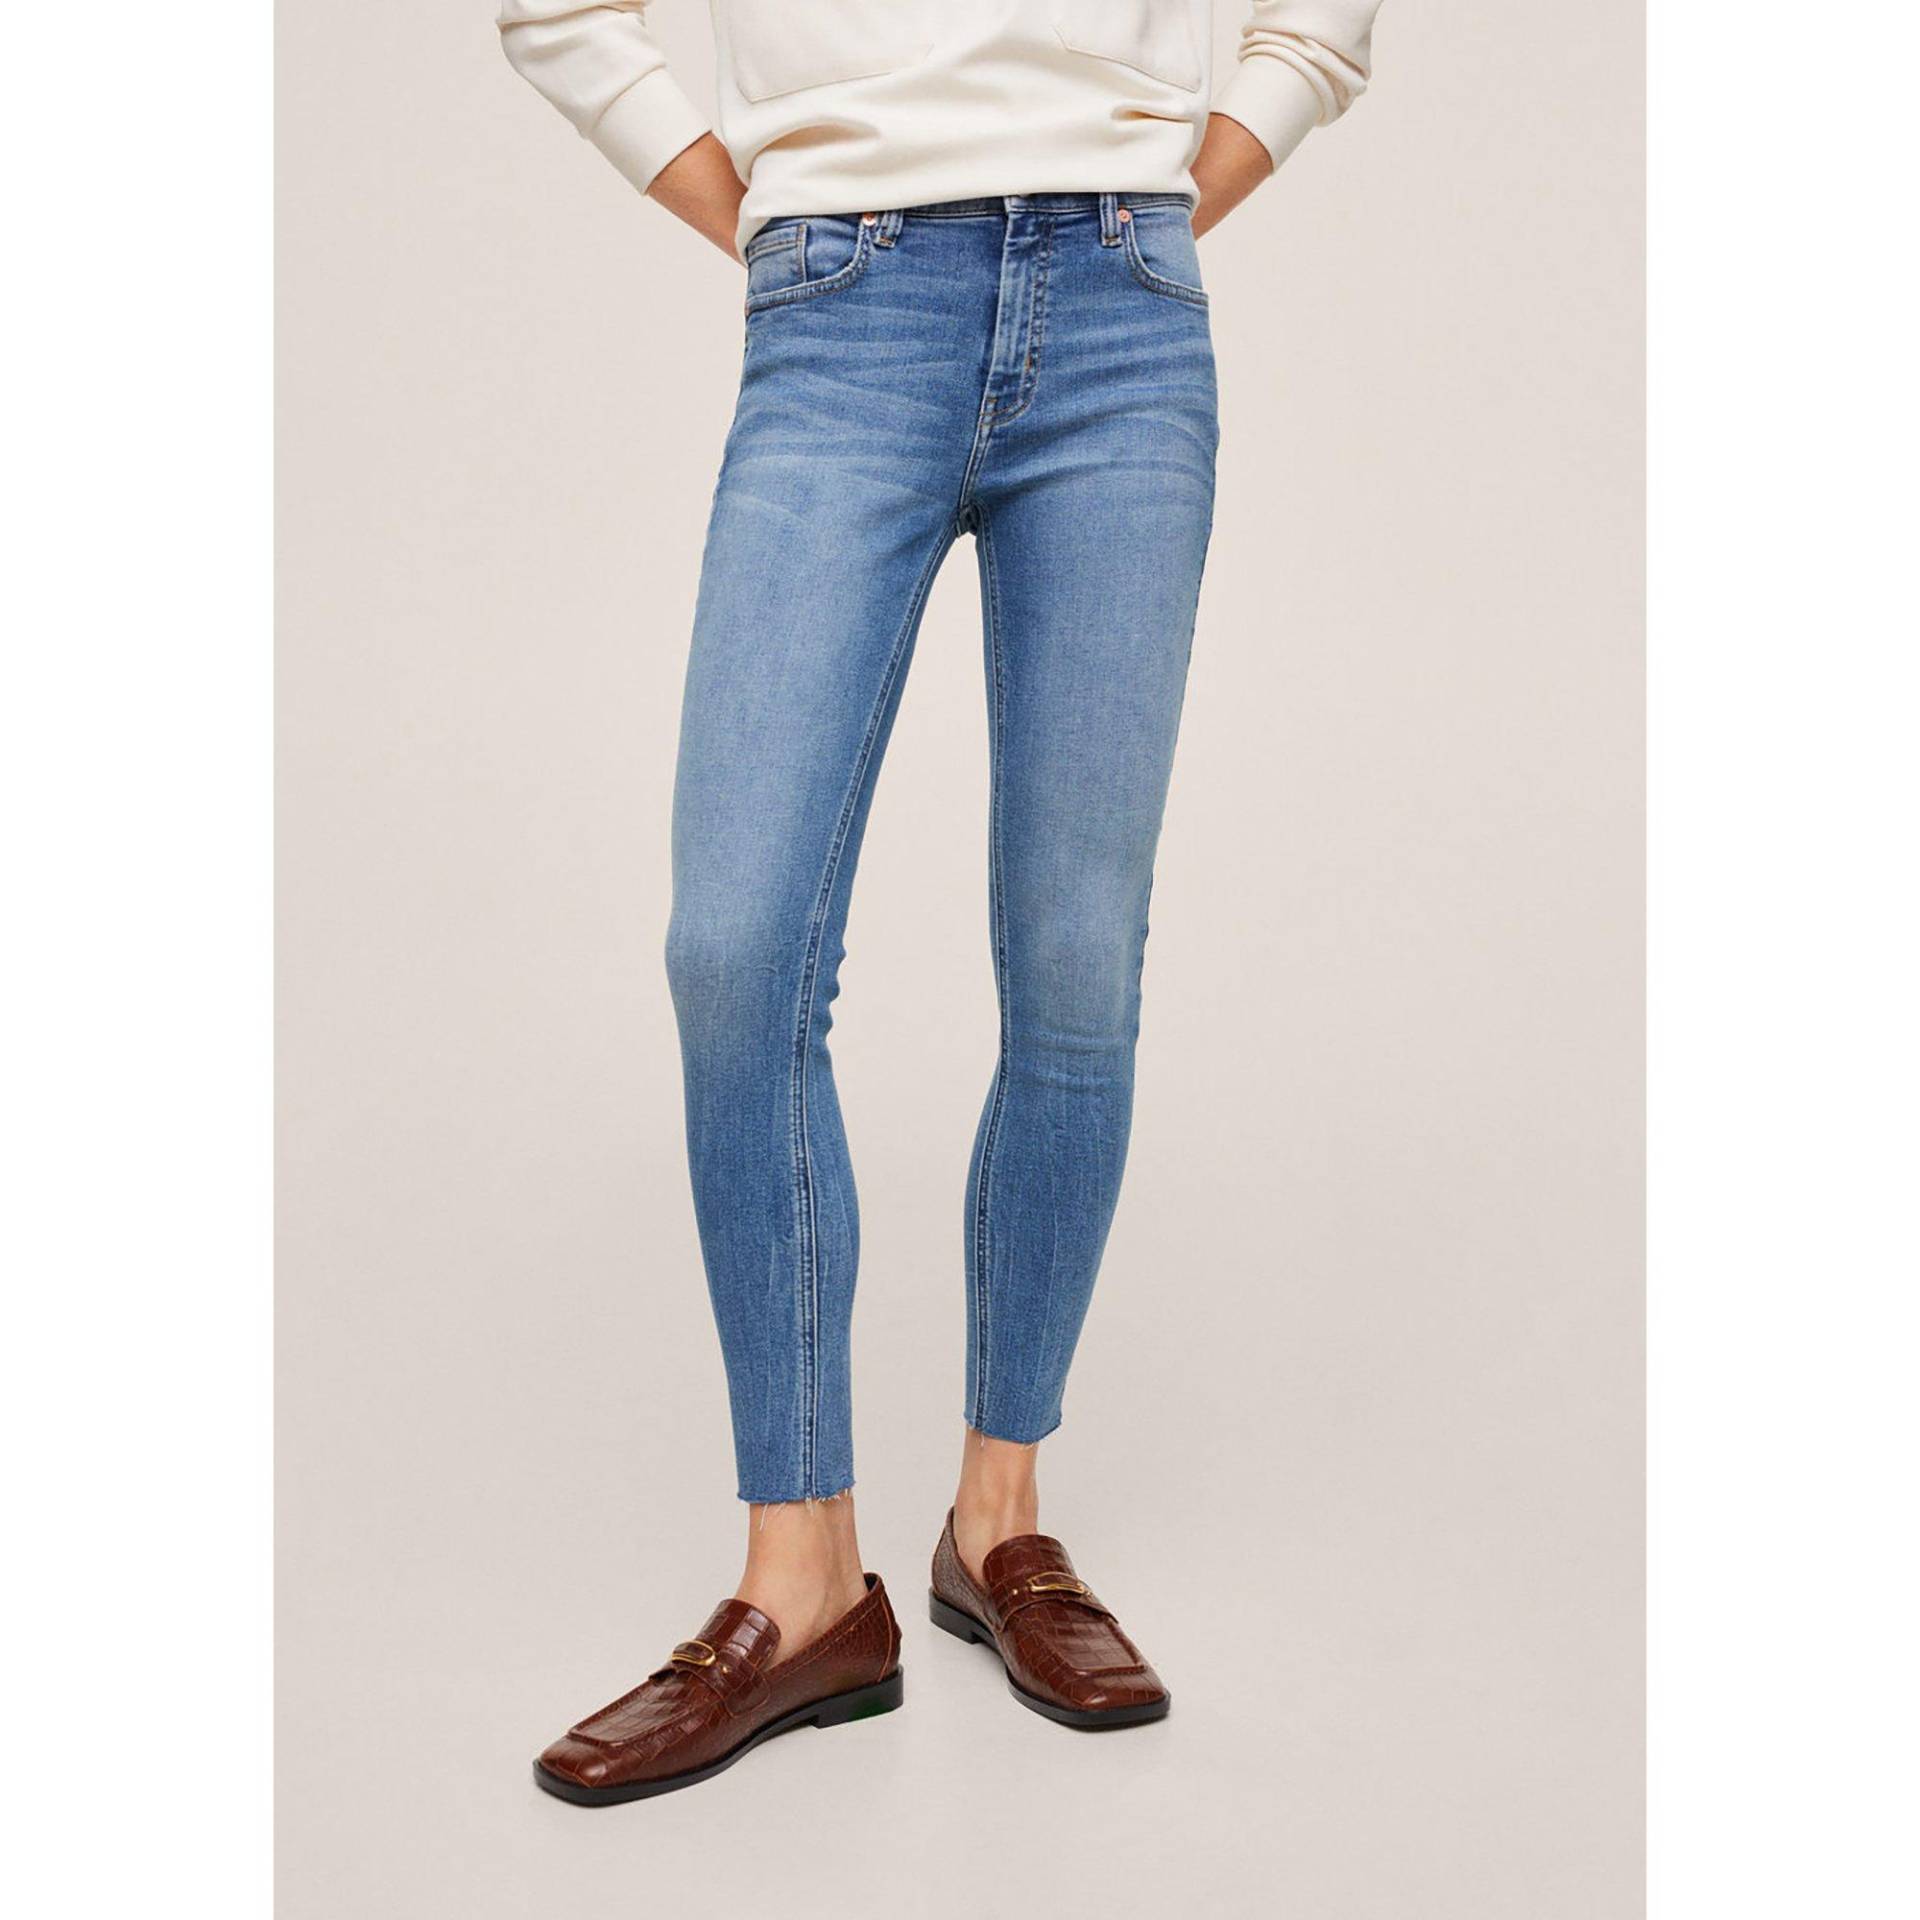 Jeans, Skinny Fit Damen Blau  34 von MANGO